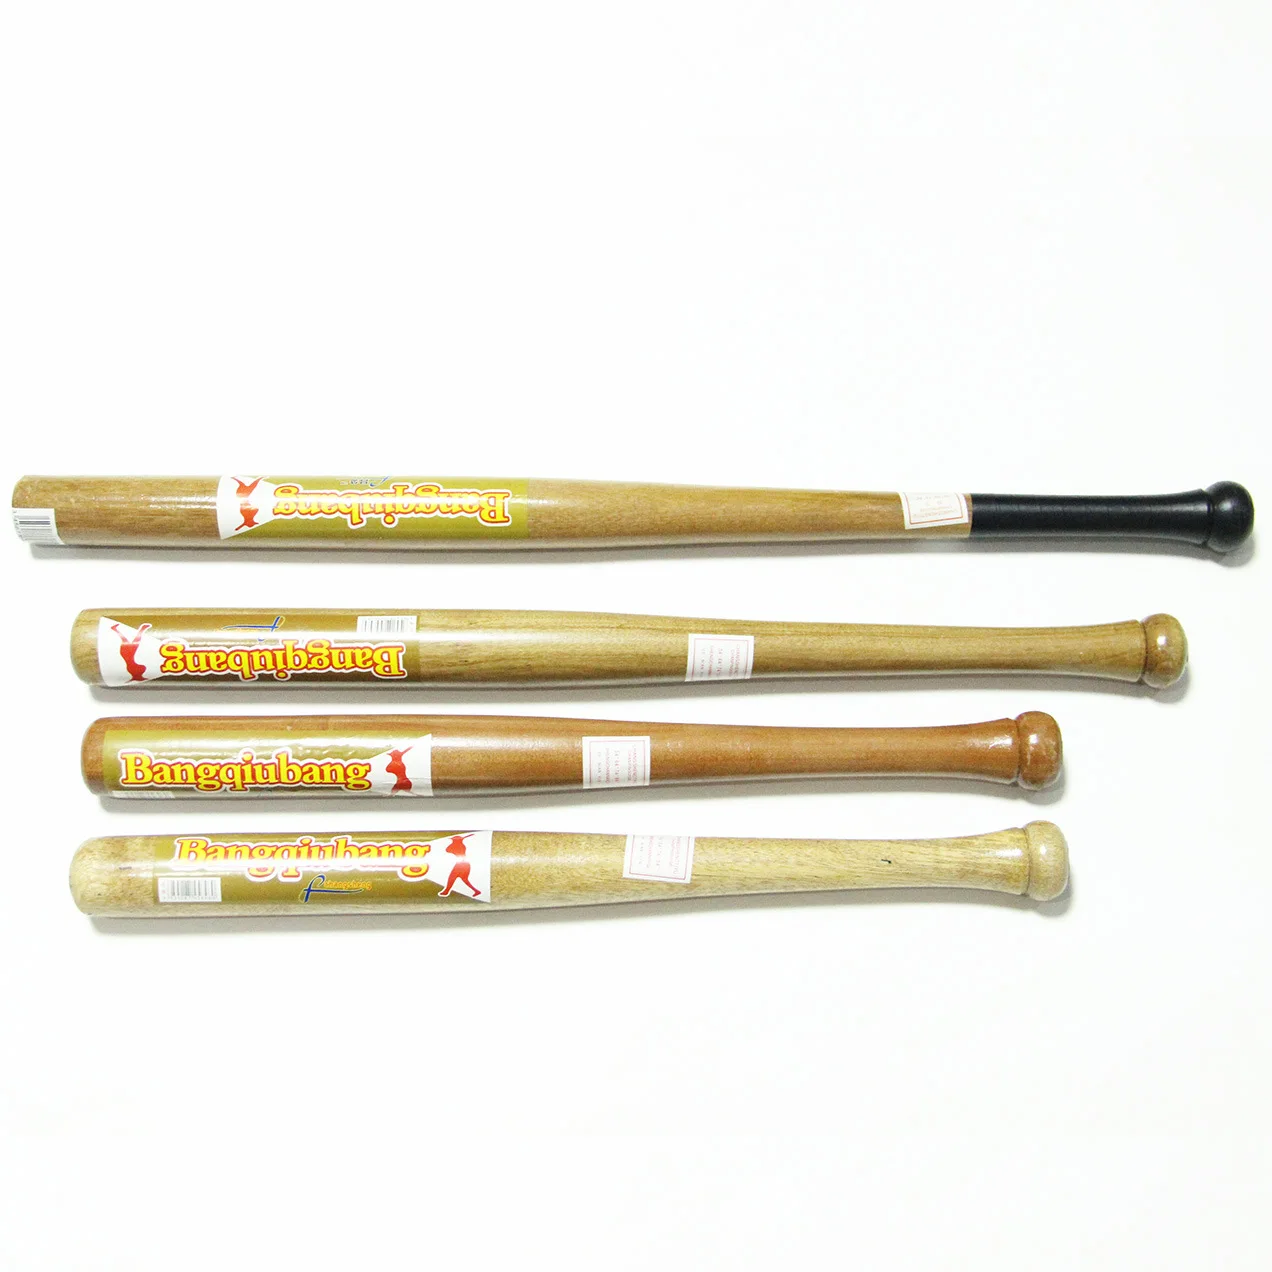 【Can DIY Customizable information on bat】Wooden Baseball Bat Multi Specification Vehicle Mounted Defensive Baseball Bat